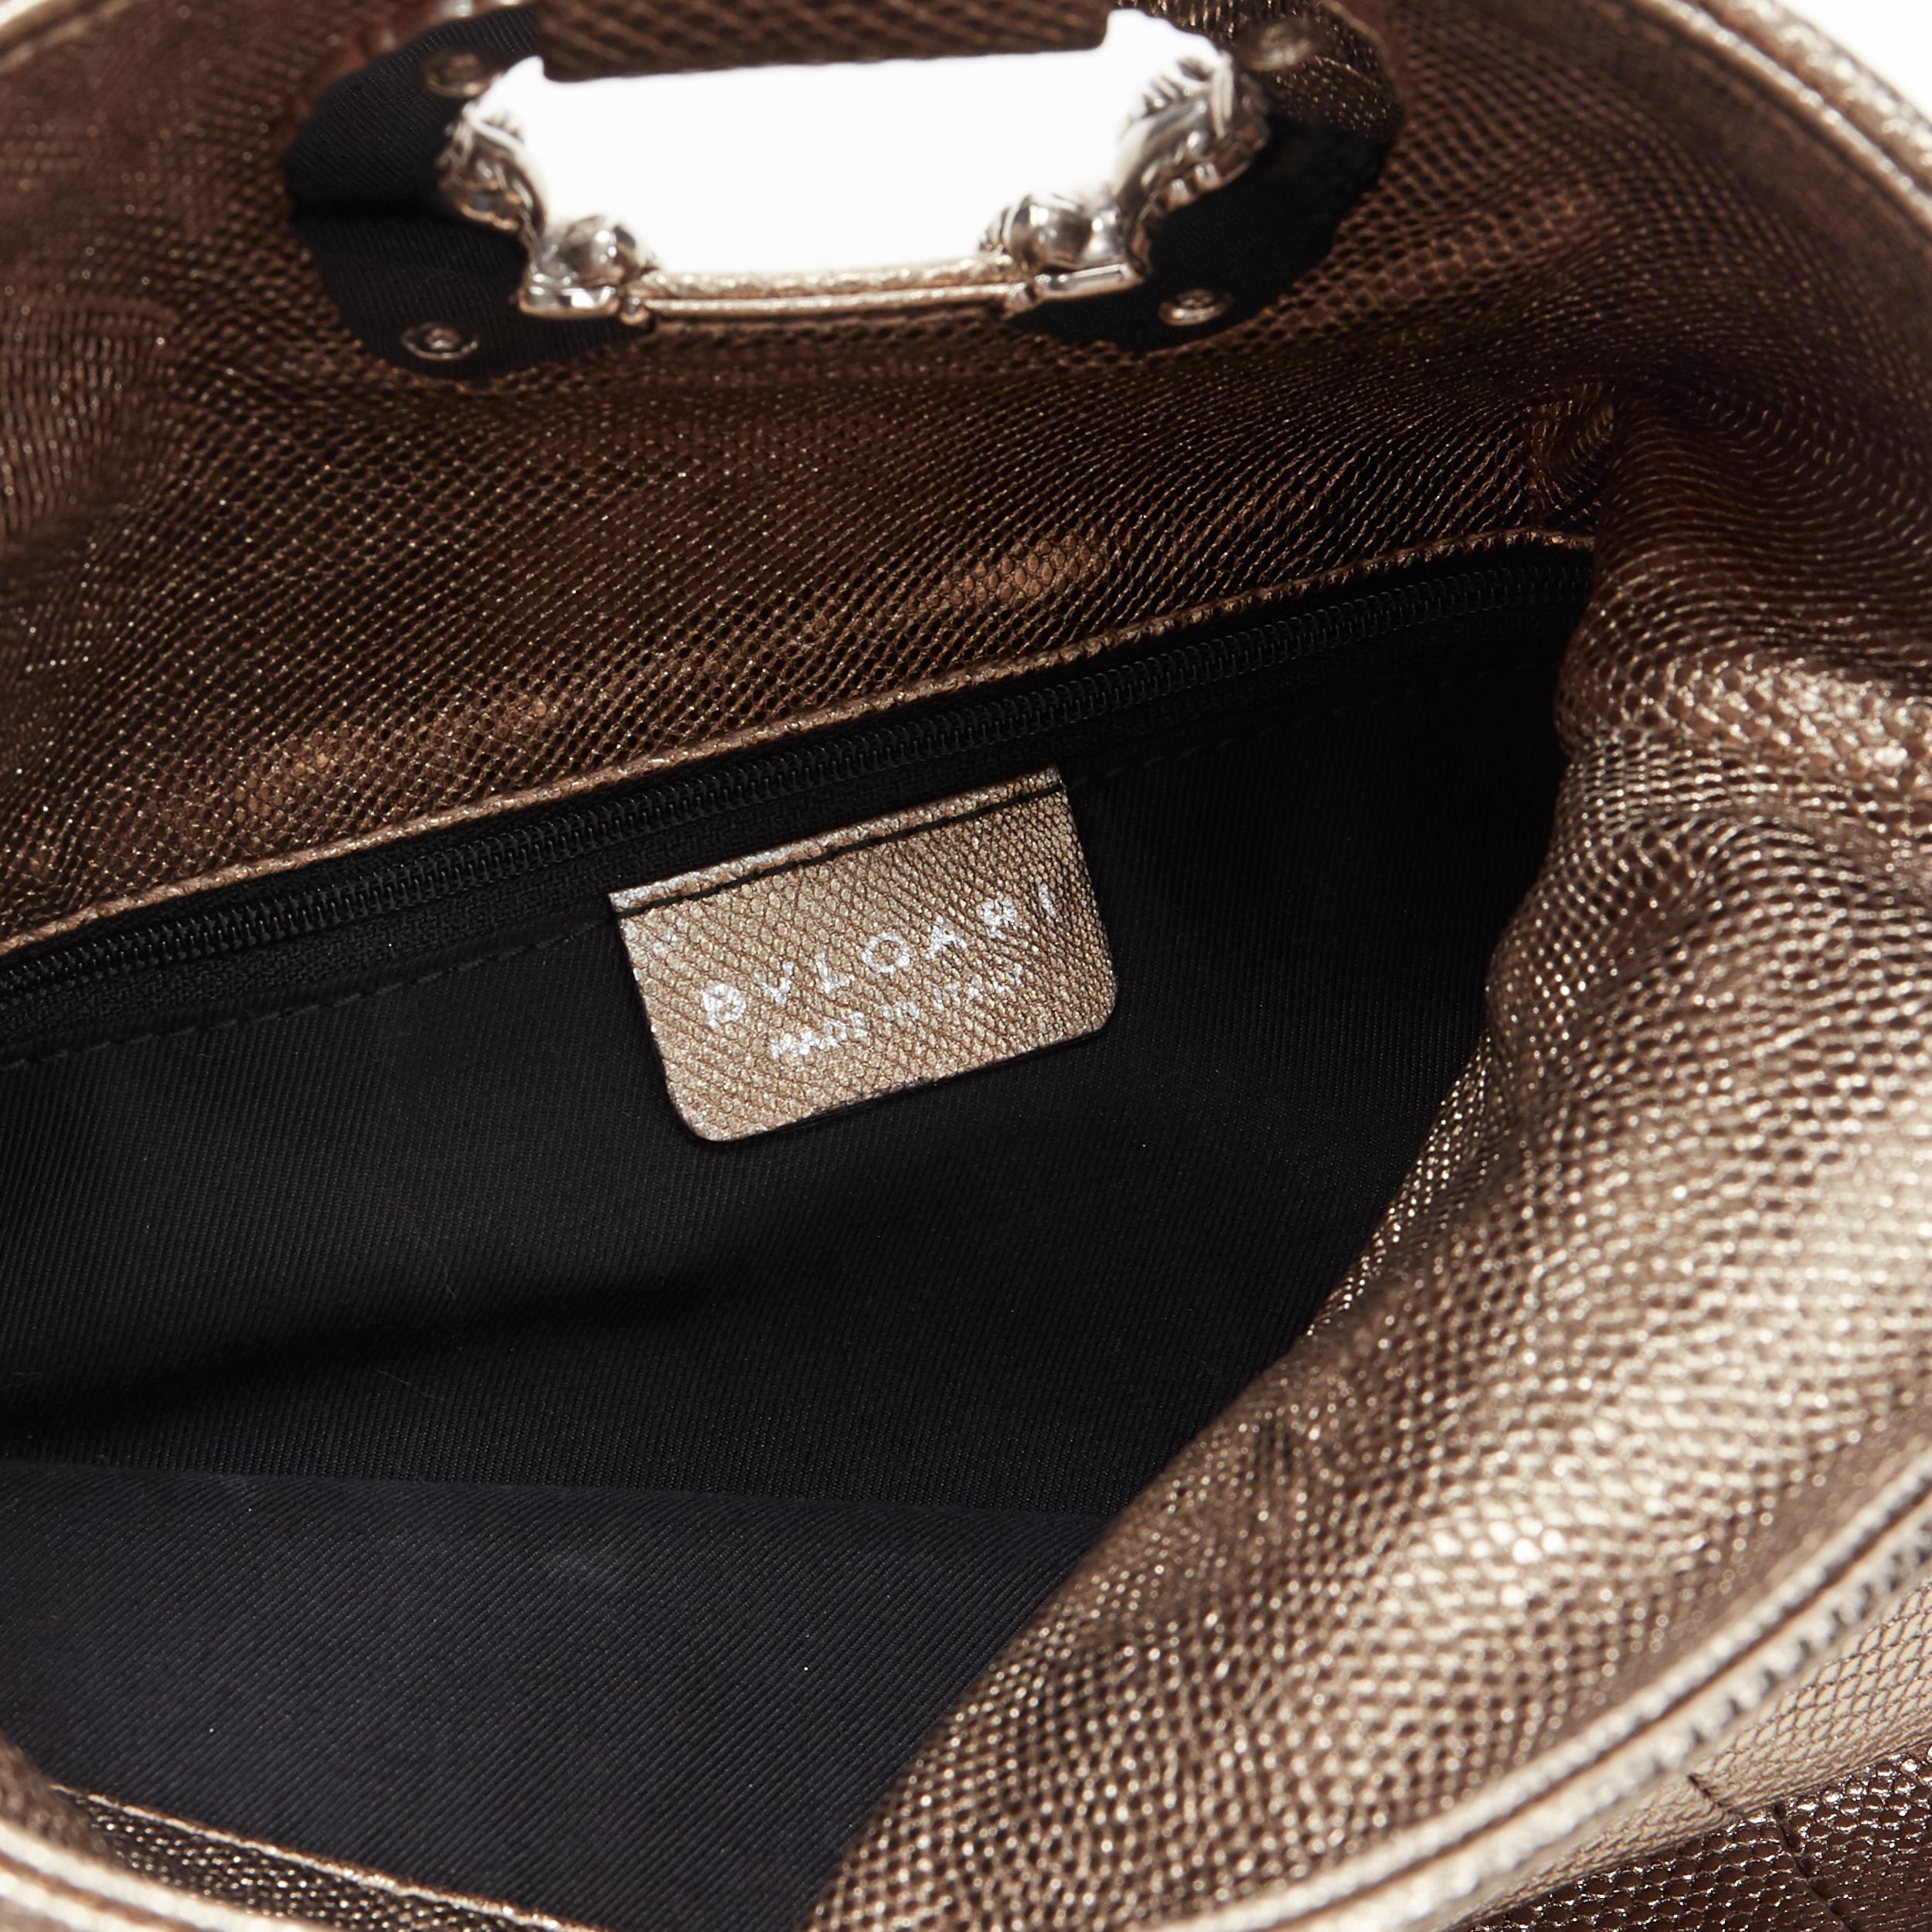 Women's BVLGARI metallic gold leather silver buckle foldover shoulder chain clutch bag